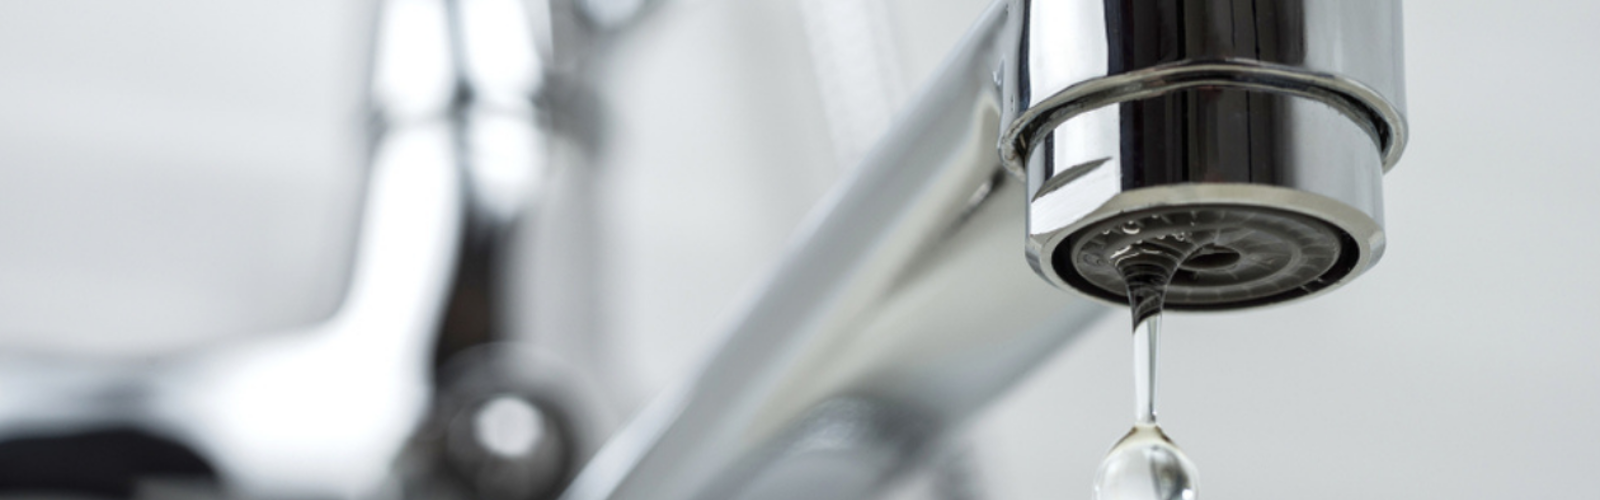 Tap faucet leaking water